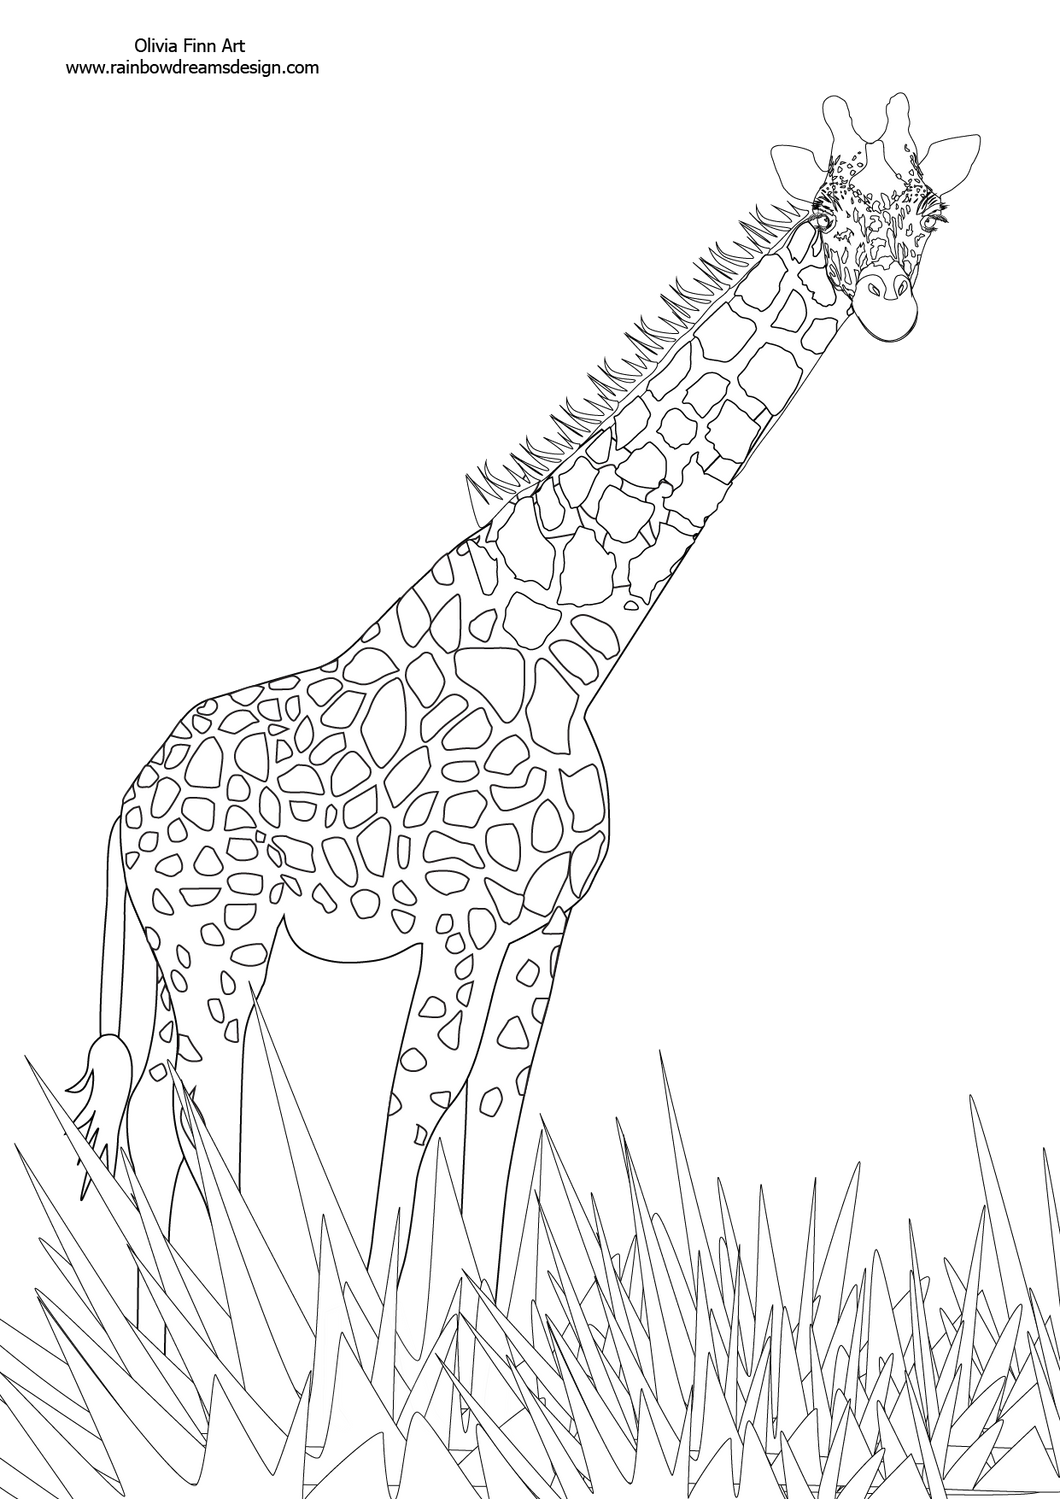 Colouring Page - Giraffe